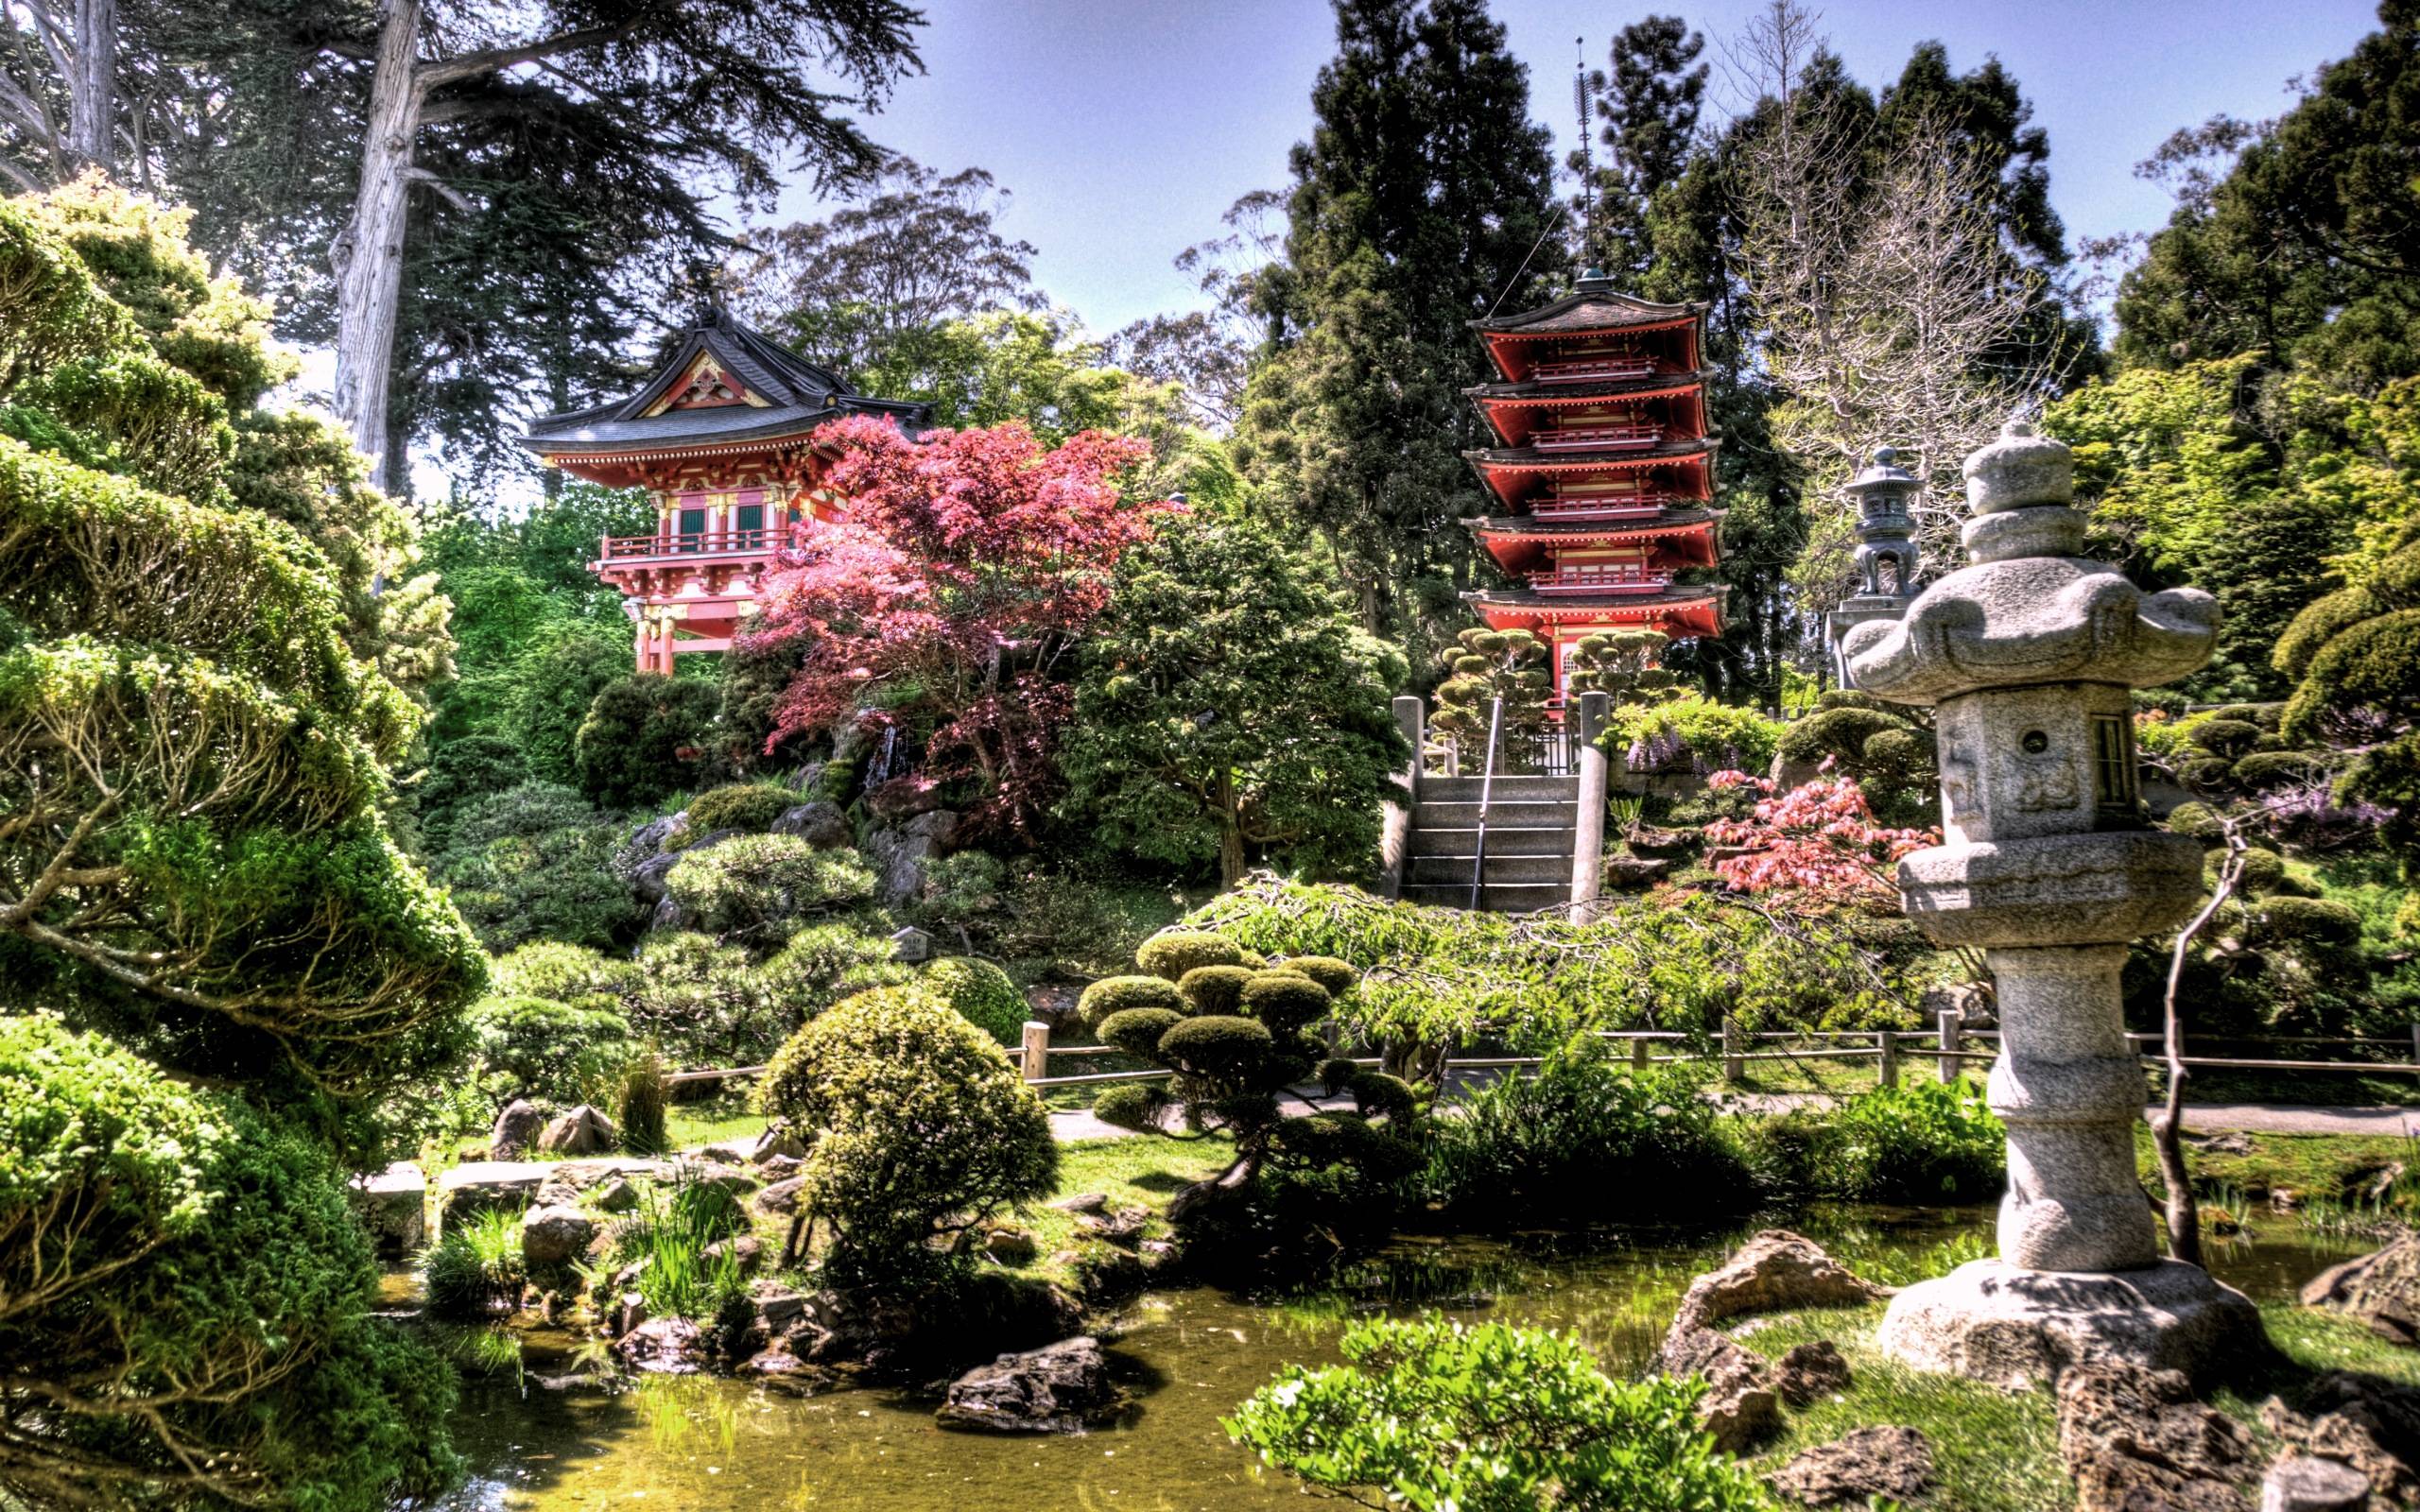 Wallpaper Japanese Garden